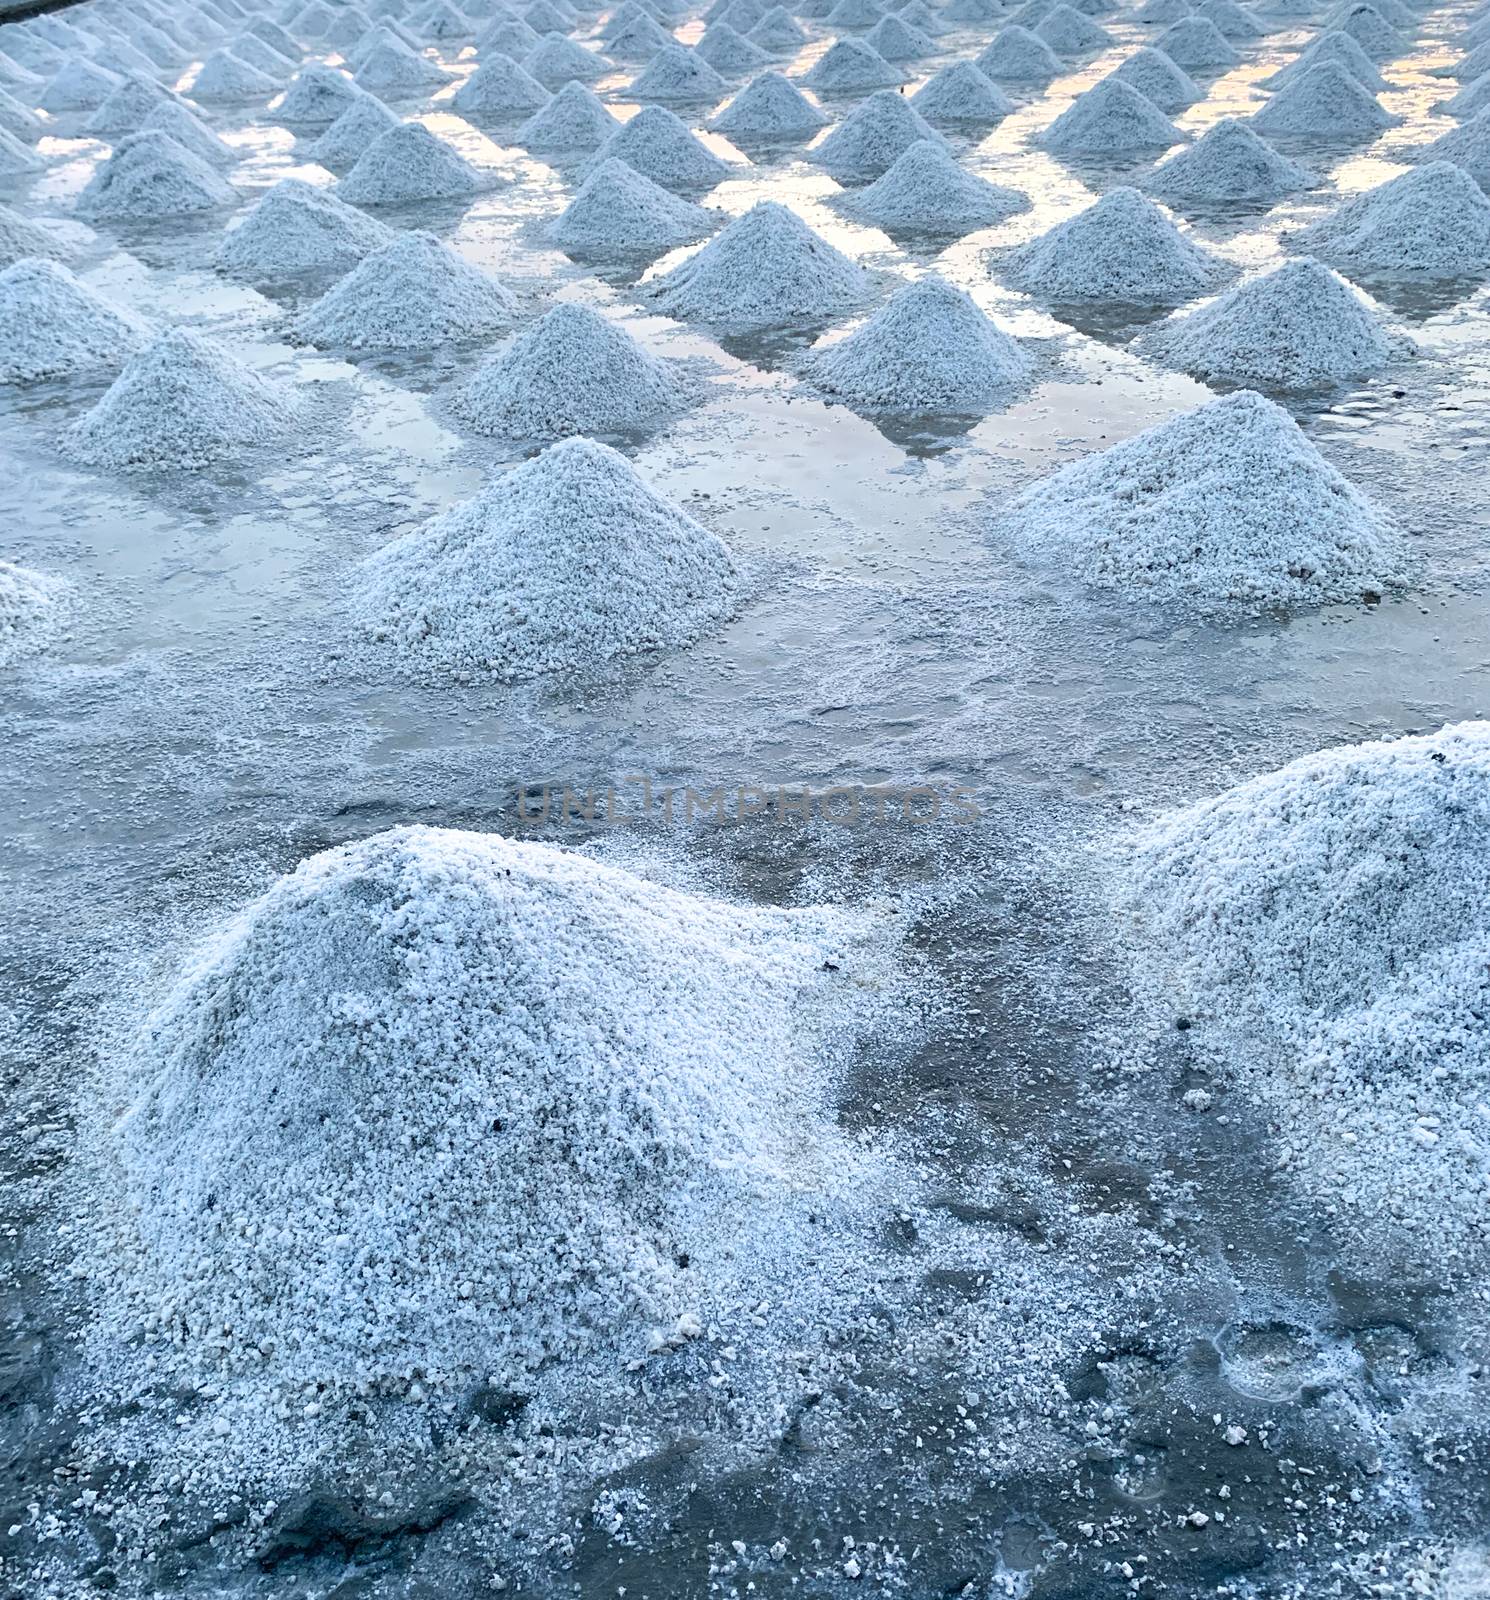 Sea salt farm at Samut Sakhon, Thailand. Organic sea salt. Evaporation and crystallization of sea water. Raw material of salt industrial. Sodium Chloride. Solar evaporation system. Iodine source. 